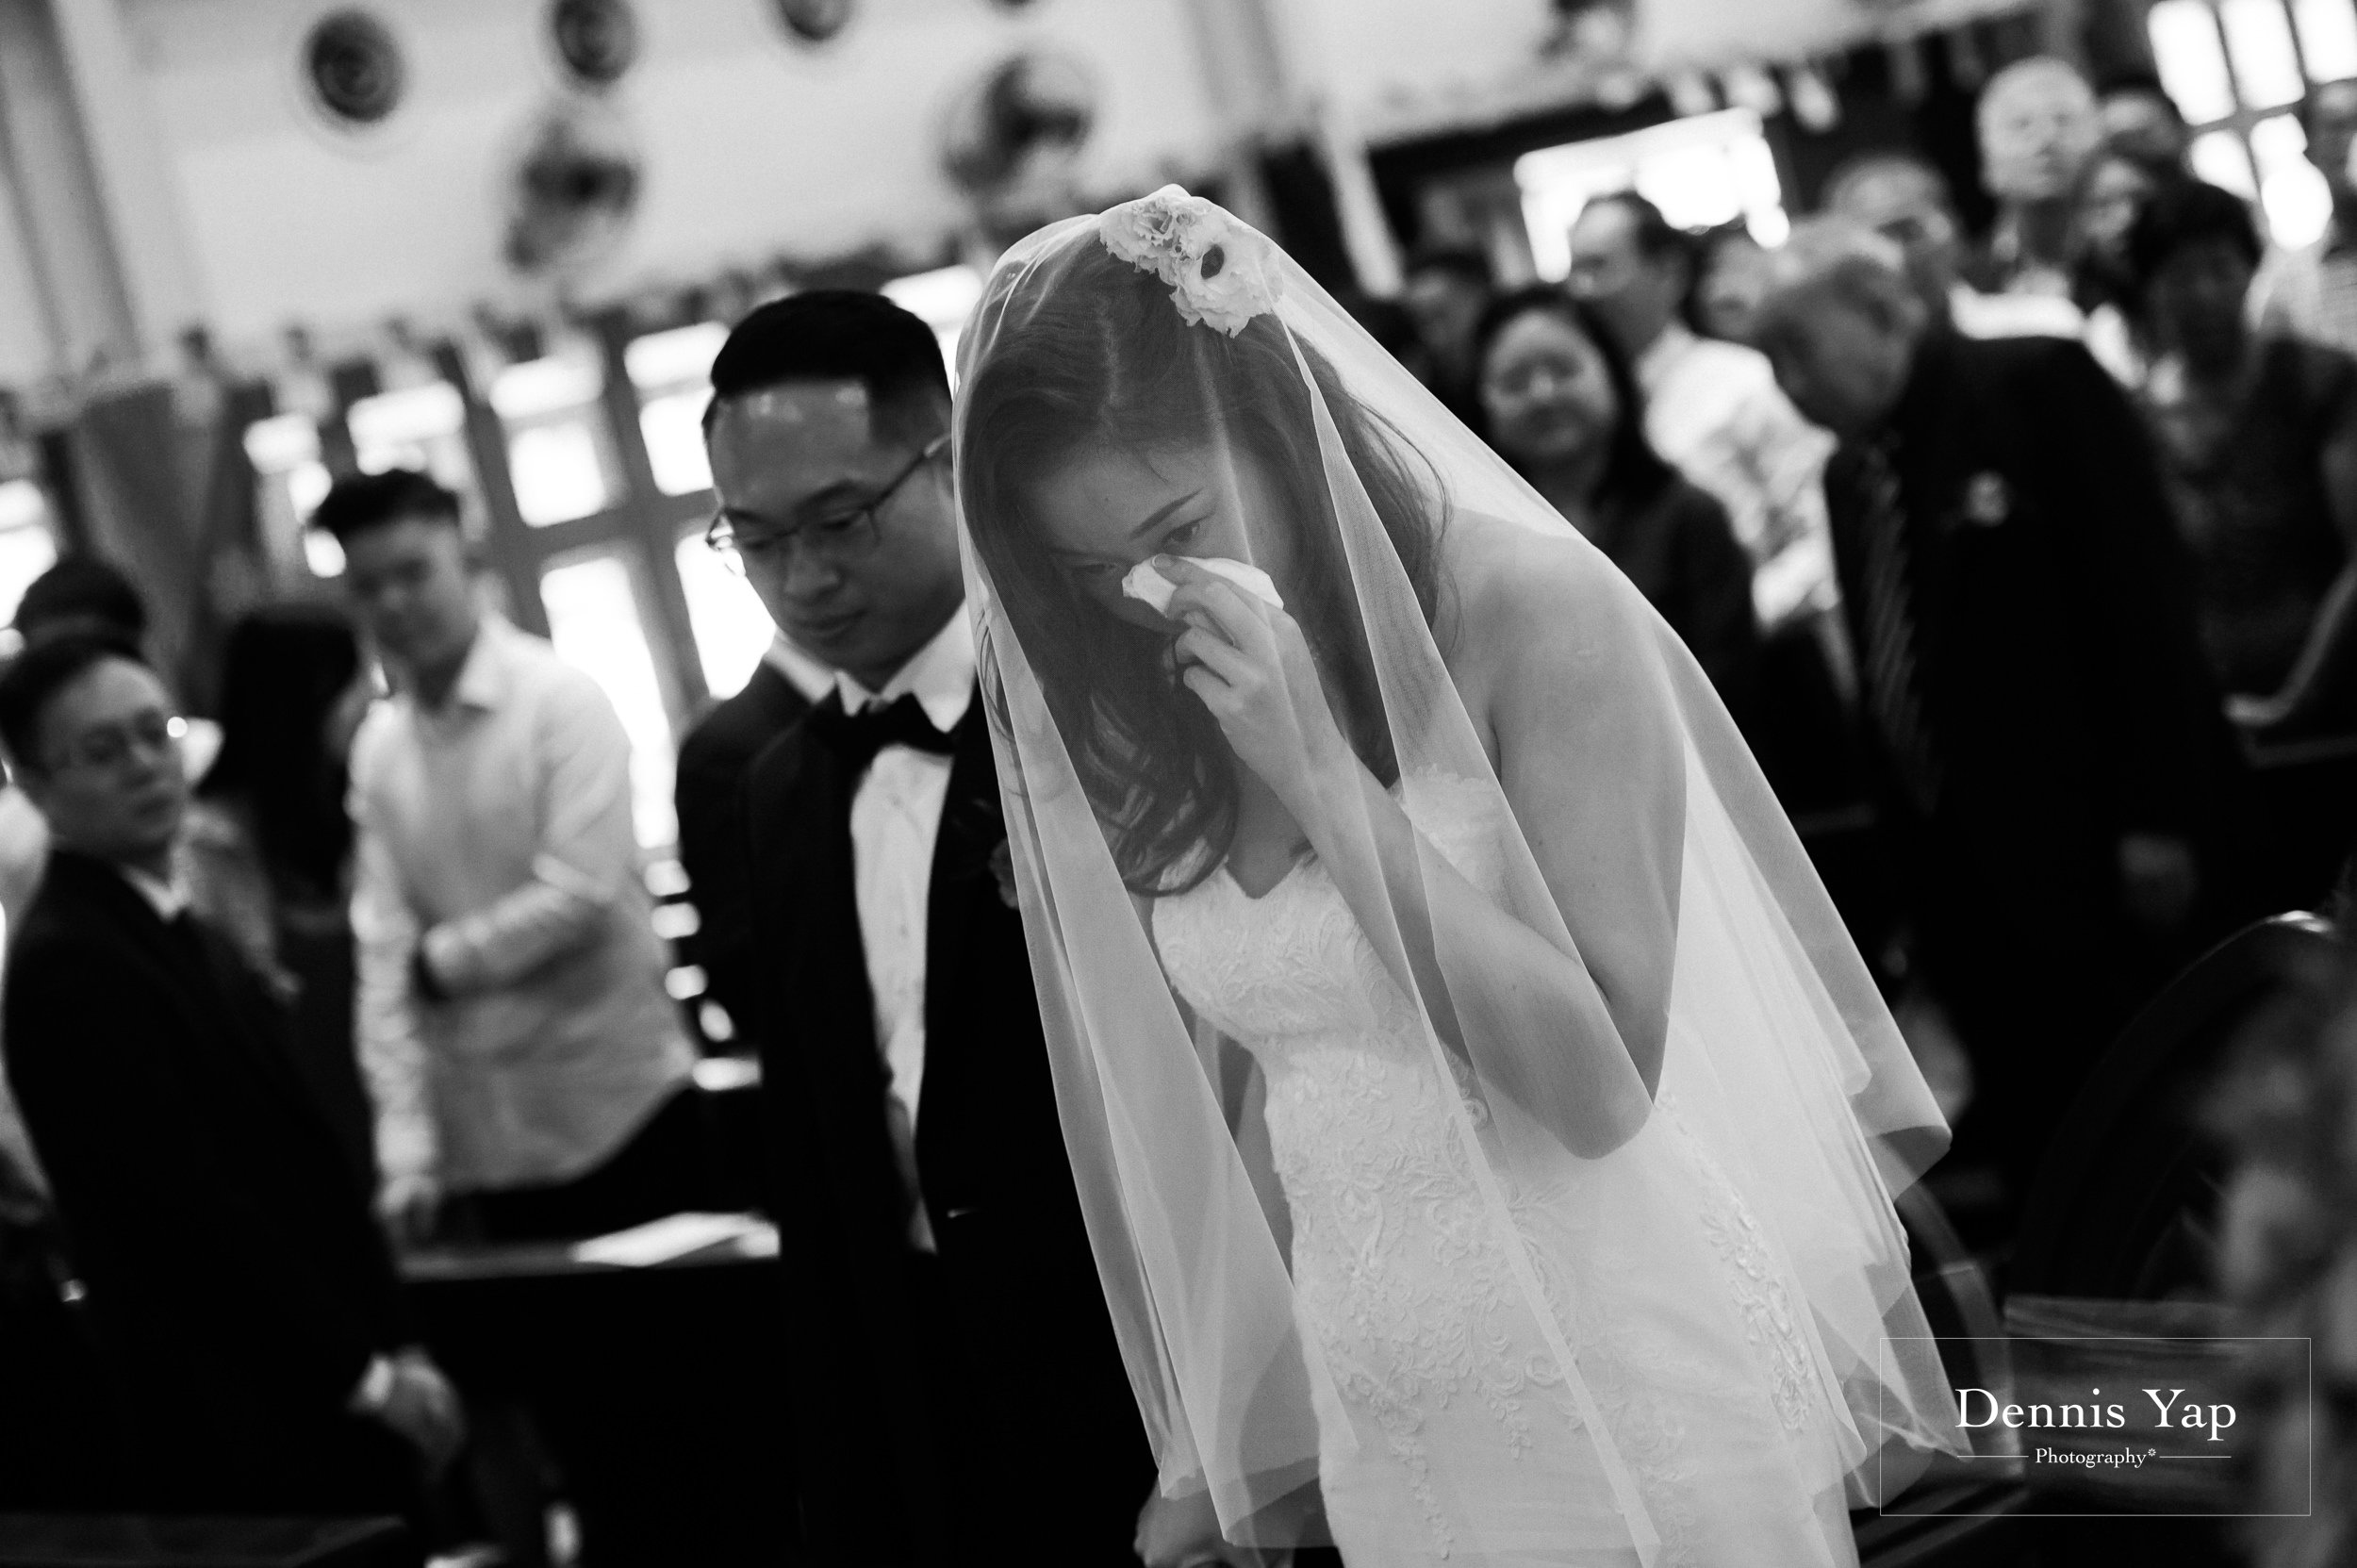 reuben daphne church wedding st francis xavier kuala lumpur dennis yap photography-25.jpg